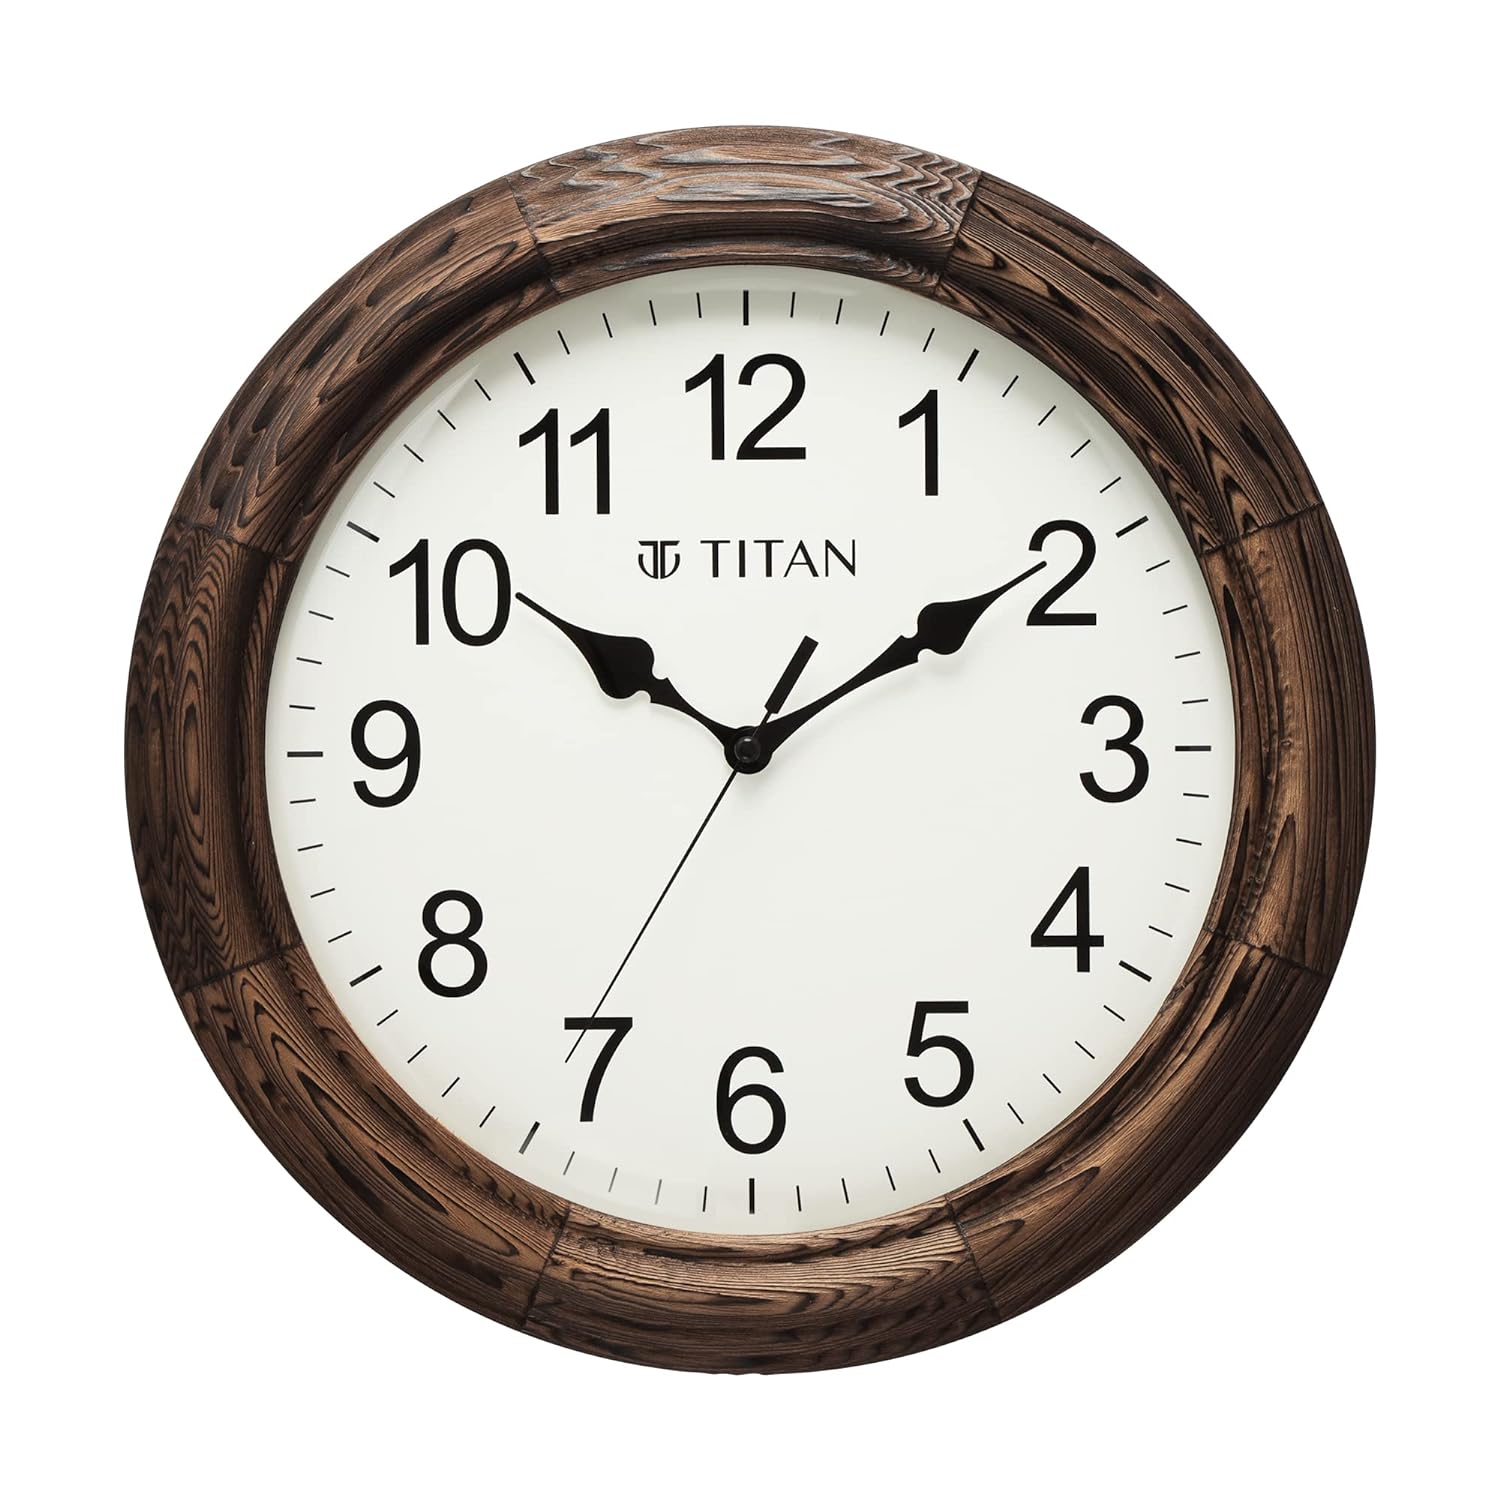 Titan Wall Clock For Home